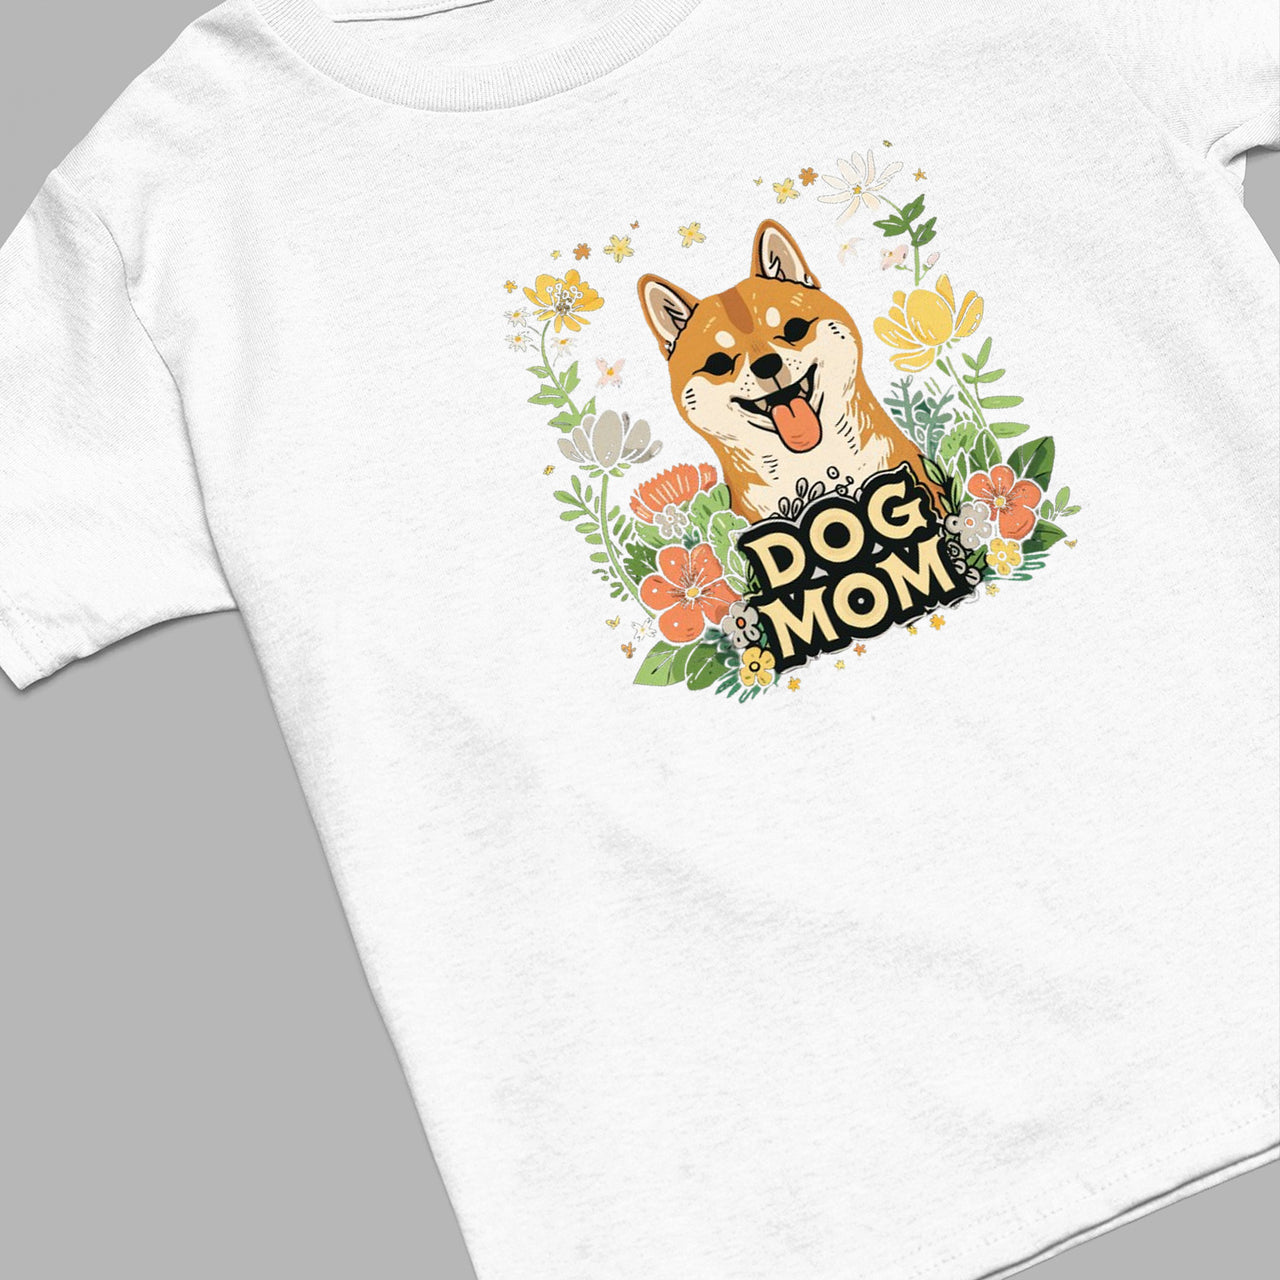 Shiba Dog T-shirt, Pet Lover Shirt, Dog Lover Shirt, Dog Mom T-Shirt, Dog Owner Shirt, Gift For Dog Mom, Funny Dog Shirts, Women Dog T-Shirt, Mother's Day Gift, Dog Lover Wife Gifts, Dog Shirt